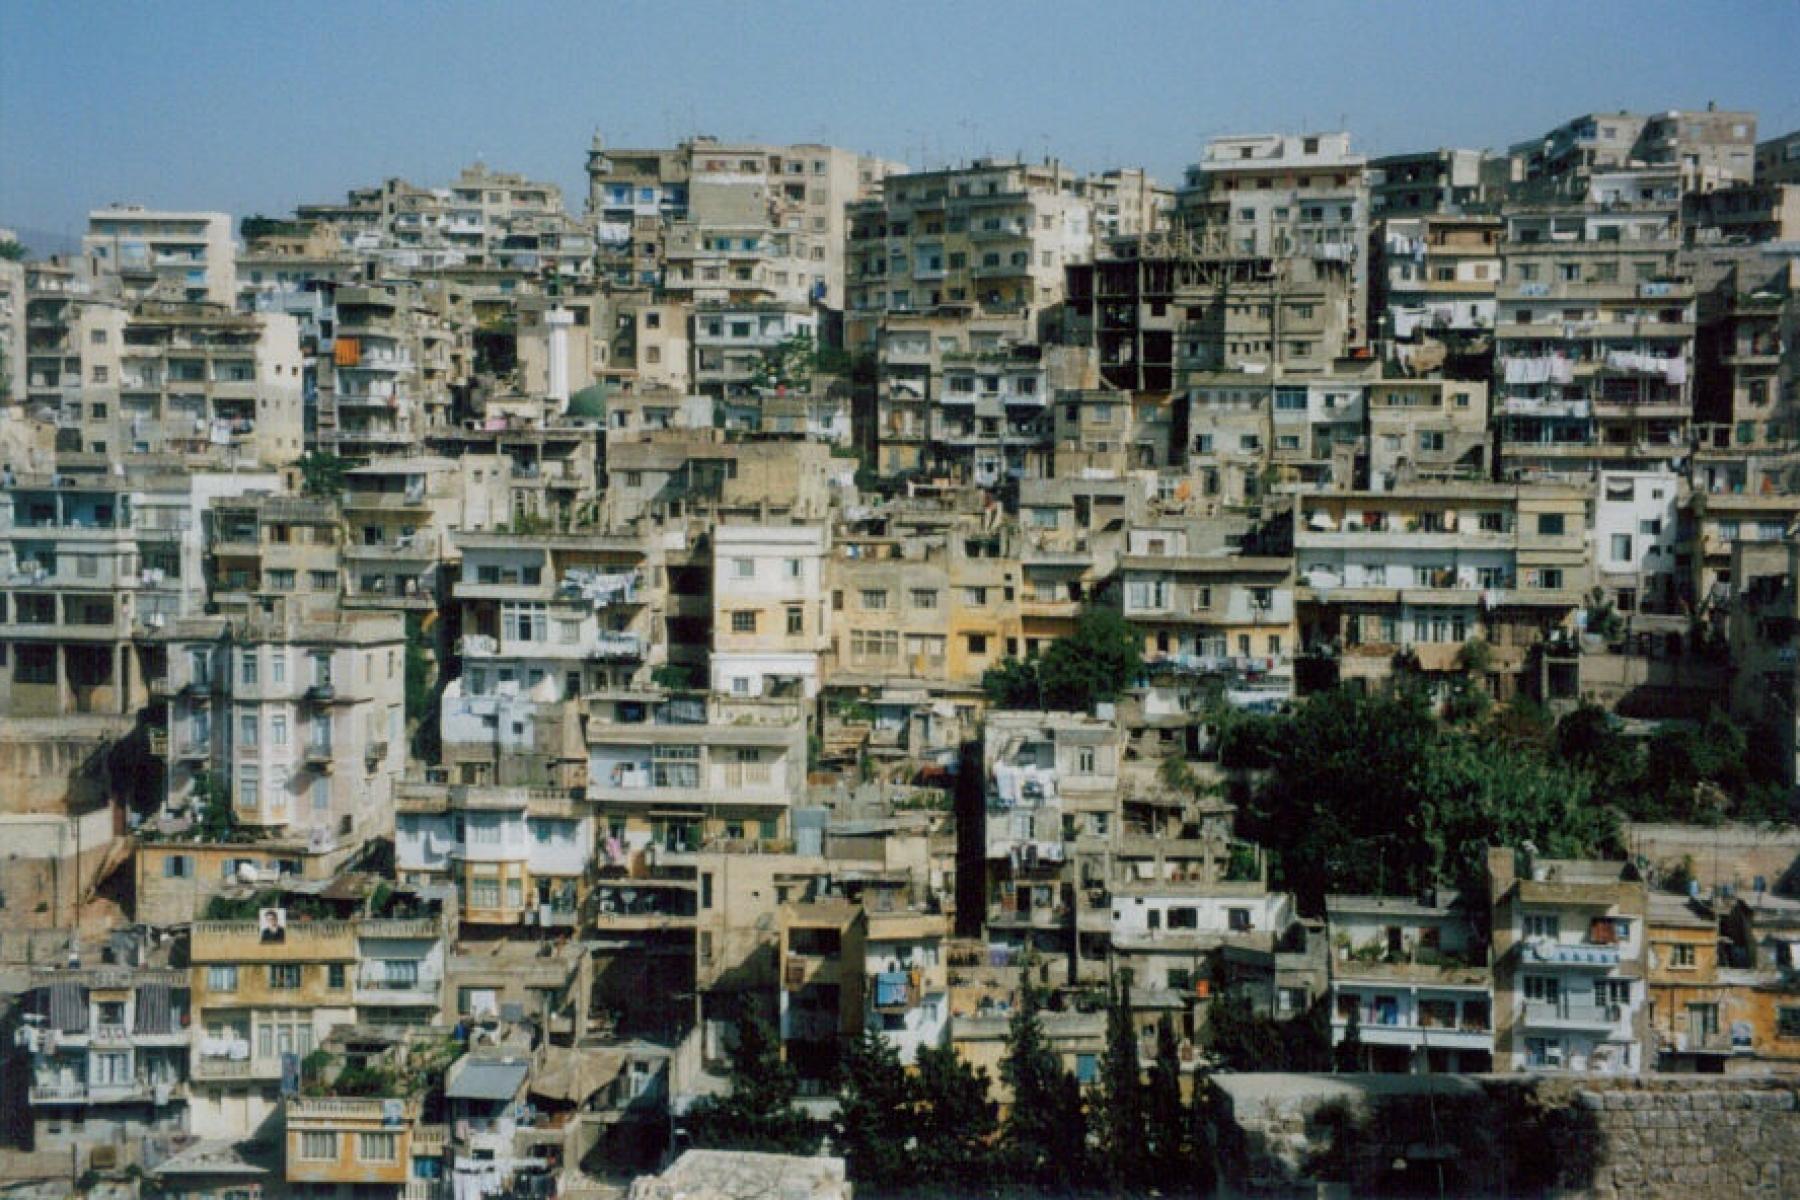 Libanons næststørste by, Tripoli